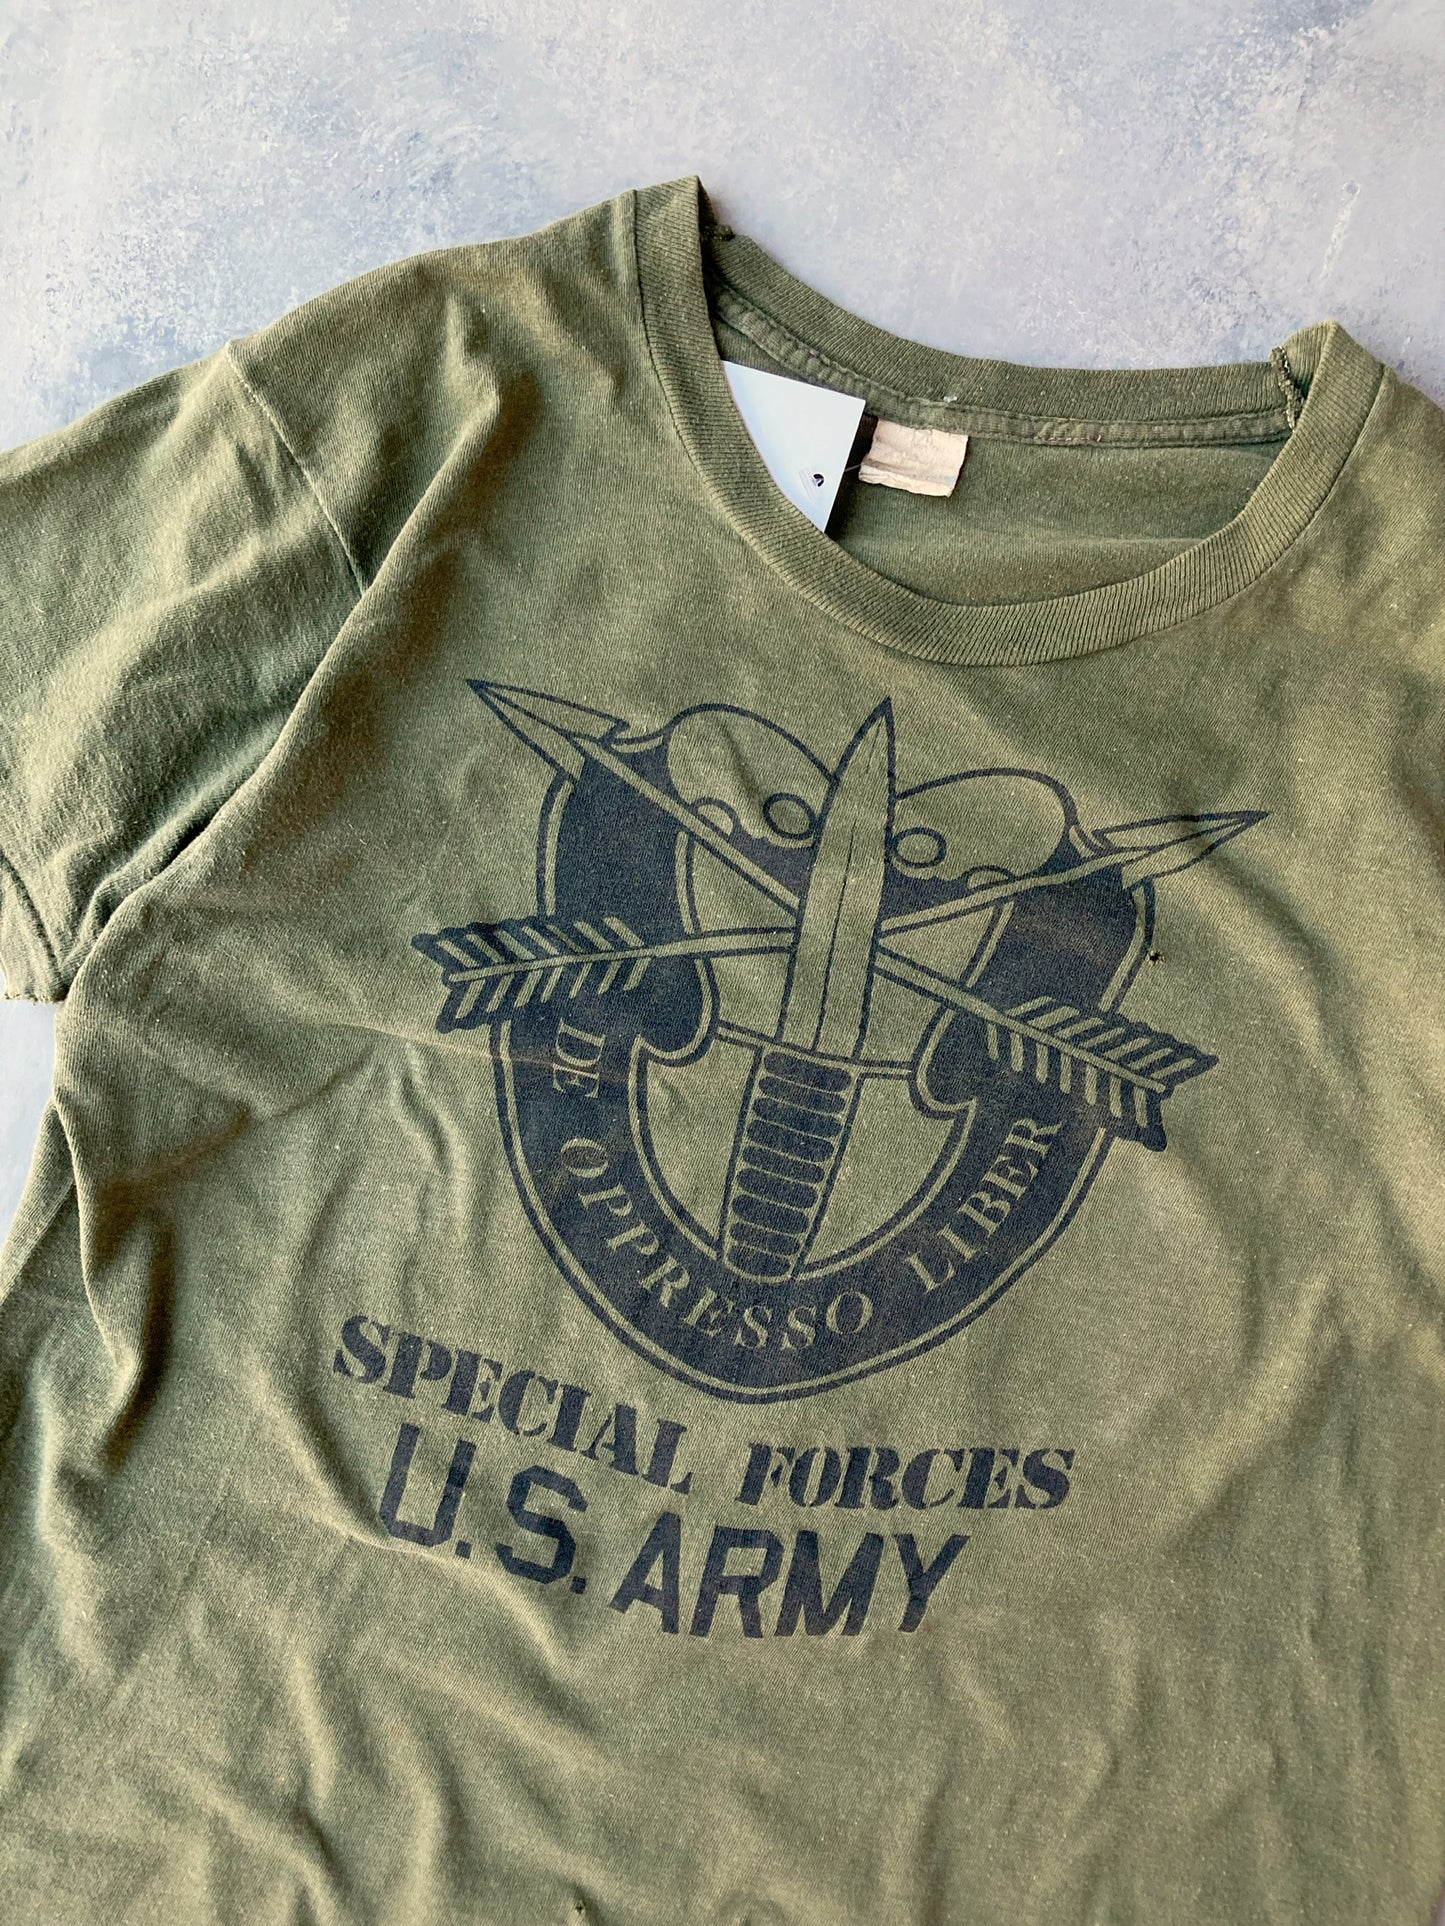 US Army T-Shirt 80's - Medium